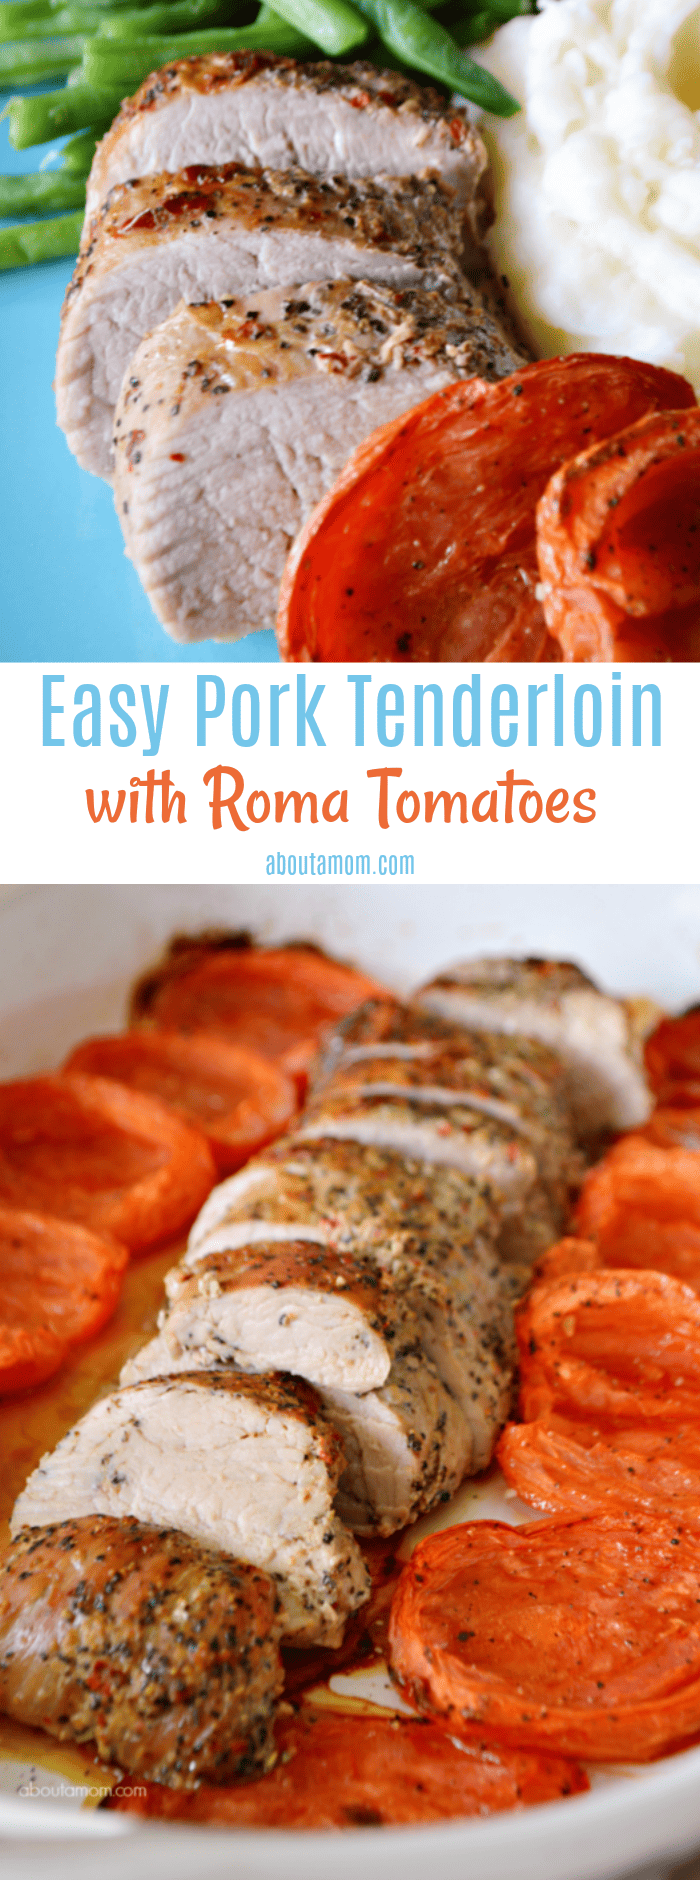 Easy Pork Tenderloin with Roma Tomatoes